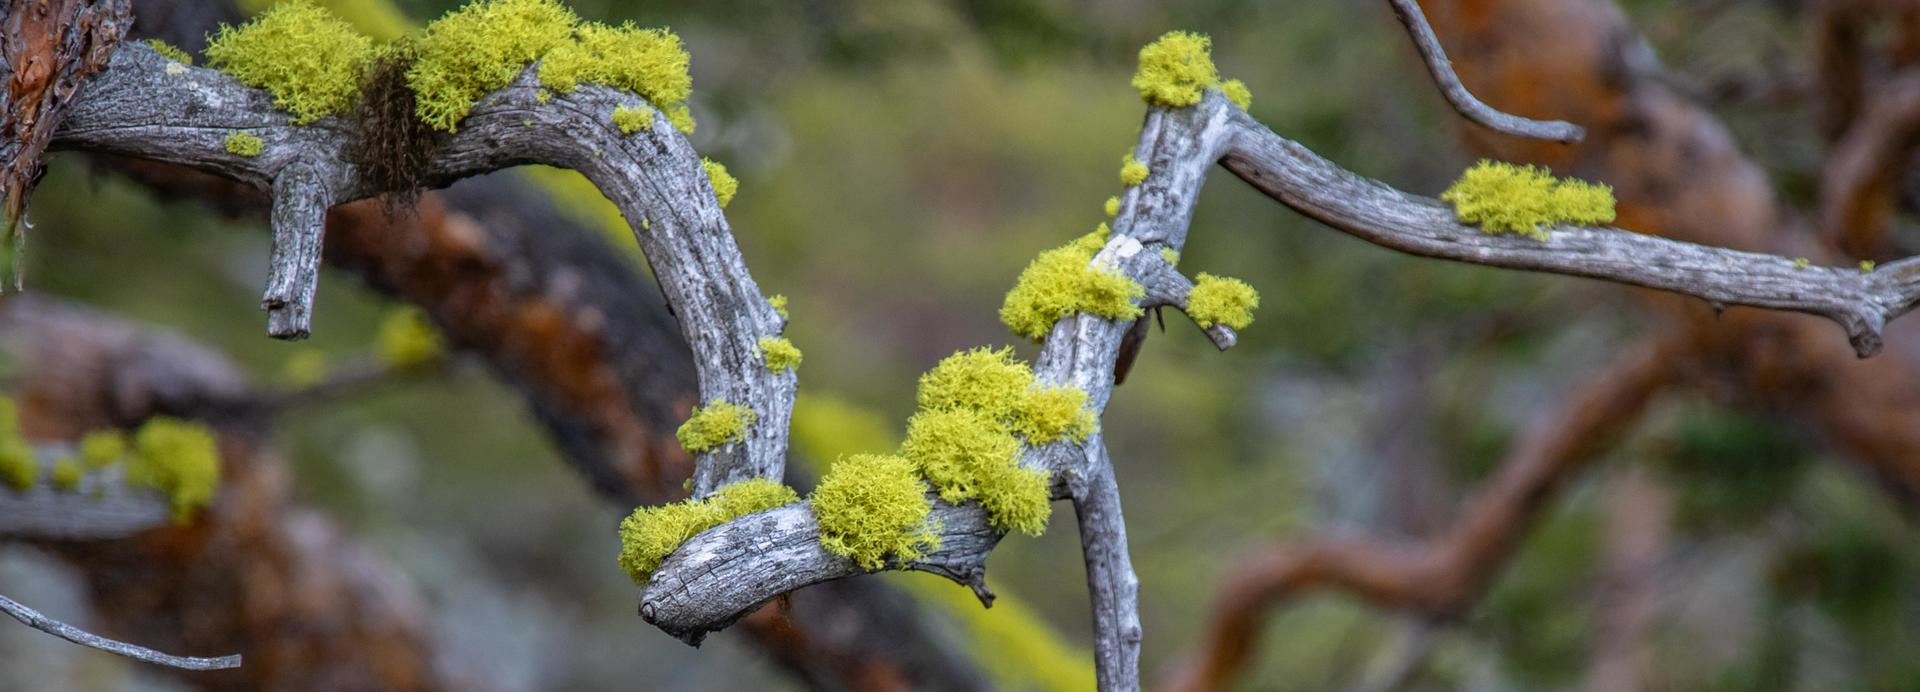 Ulvelav er en busklav i familien Parmeliaceae som i Norge finnes hovedsakelig i indre strøk av Østlandet, den vokser særlig i gammel furuskog, på tørrfuruer på myrer osv